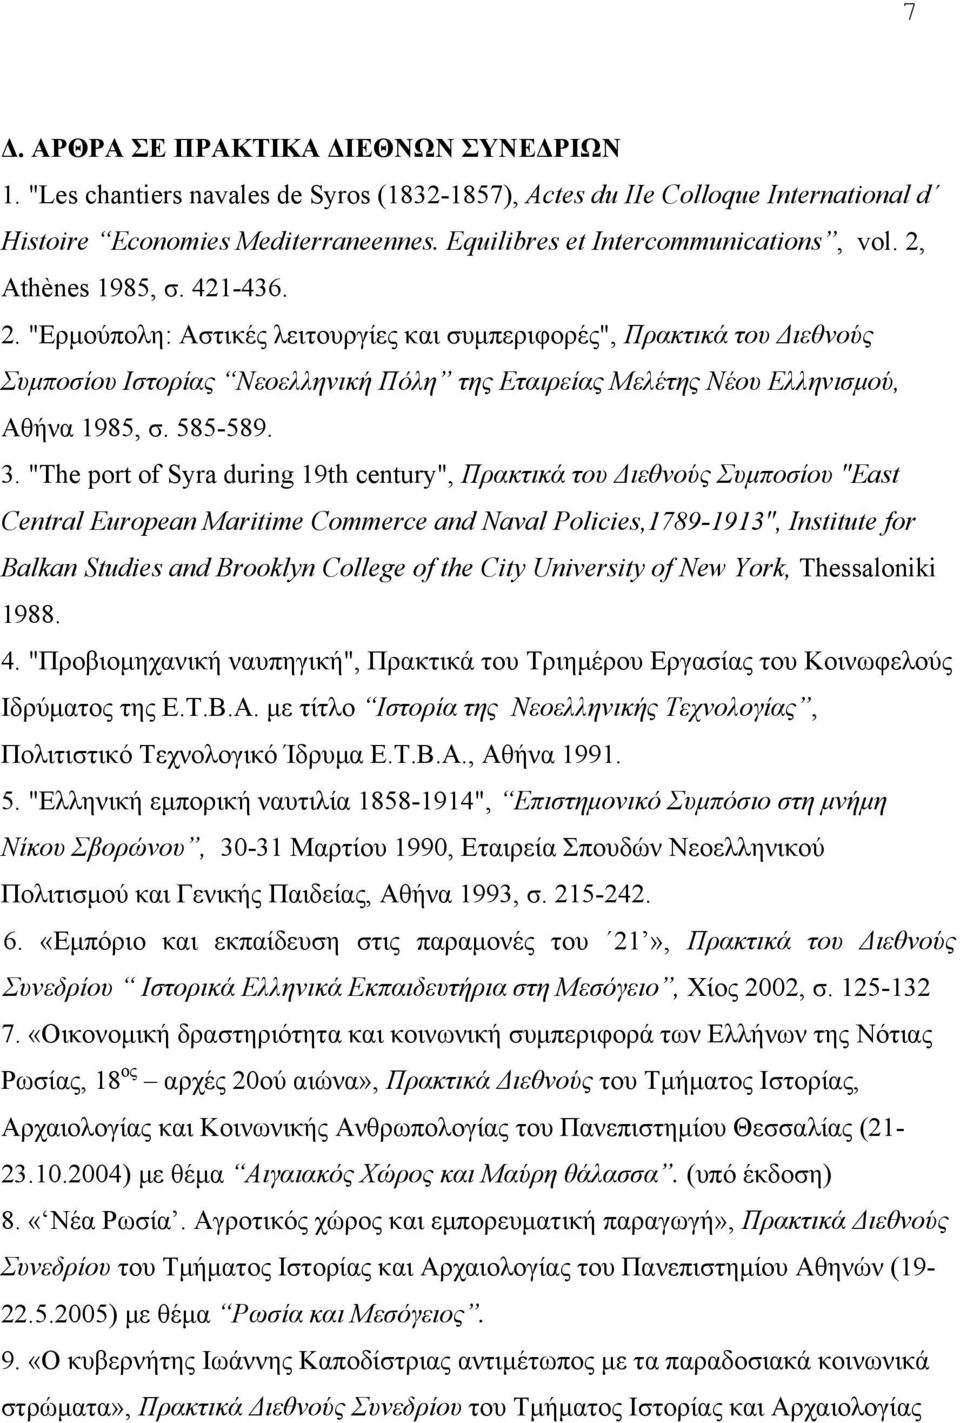 Athènes 1985, σ. 421-436. 2. "Eρµούπολη: Aστικές λειτουργίες και συµπεριφορές", Πρακτικά του Διεθνούς Συµποσίου Iστορίας Nεοελληνική Πόλη της Eταιρείας Mελέτης Nέου Eλληνισµού, Aθήνα 1985, σ. 585-589.